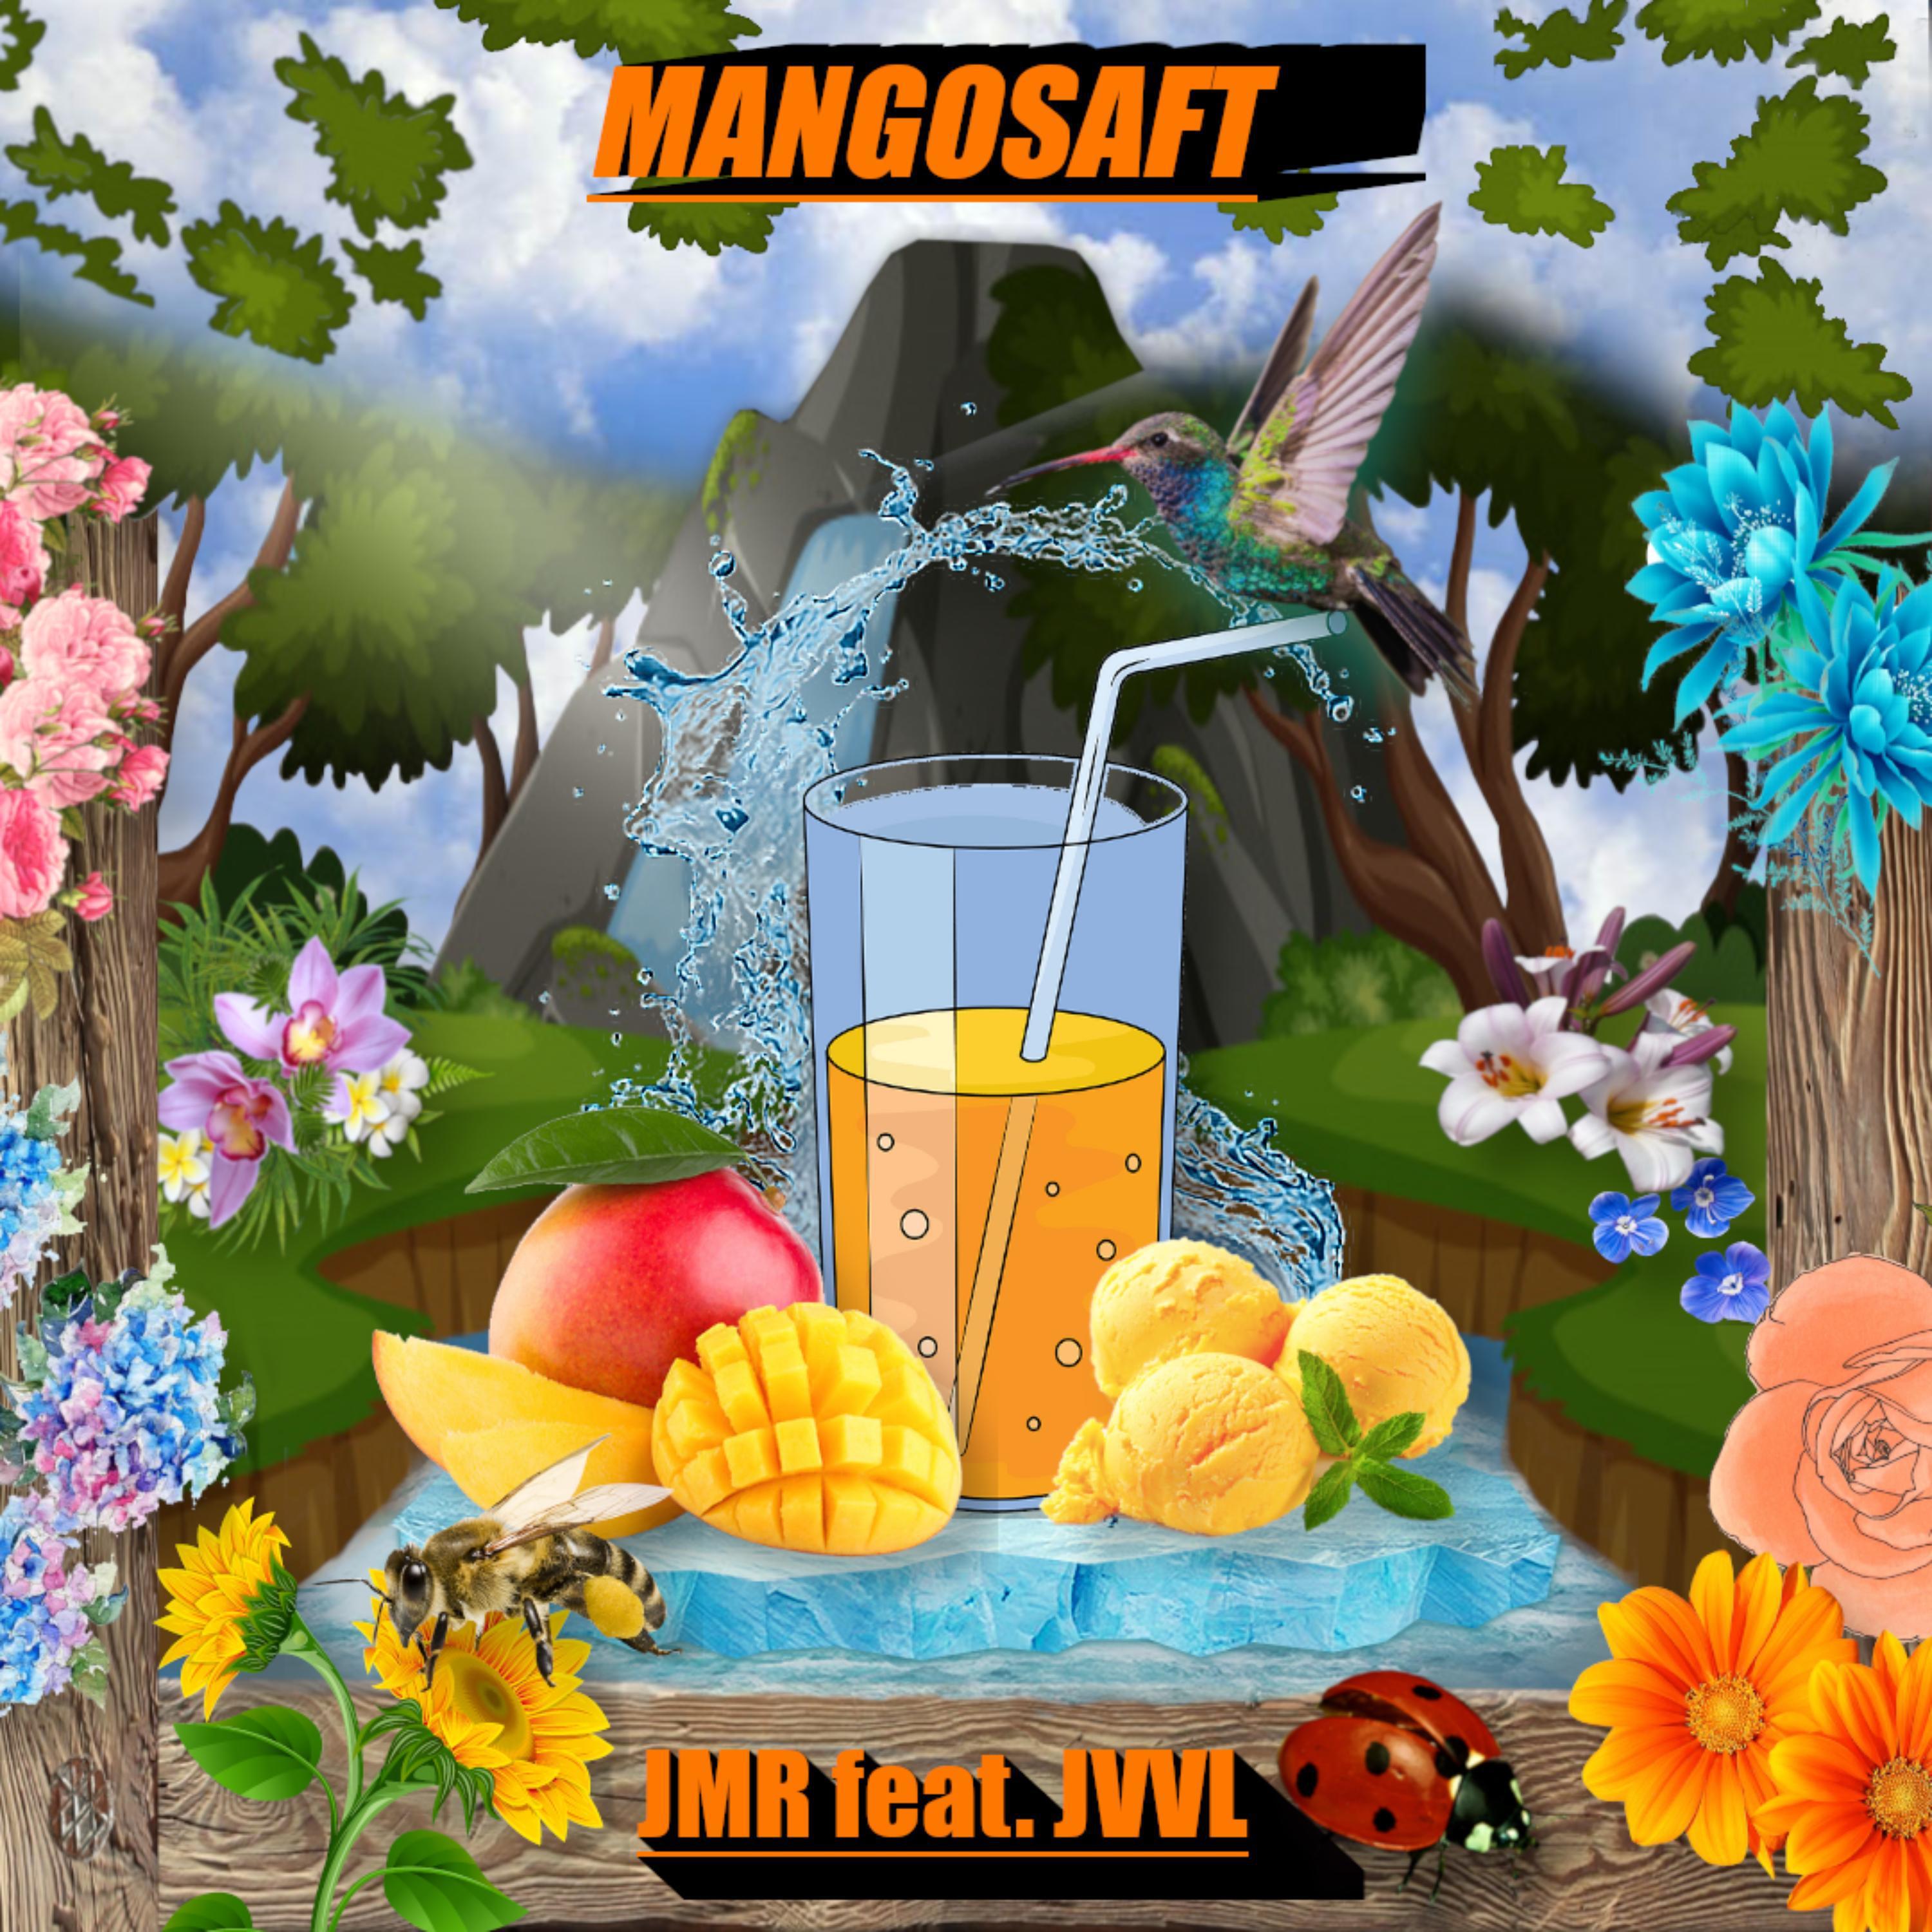 JMR - Mangosaft (feat. JVVL)